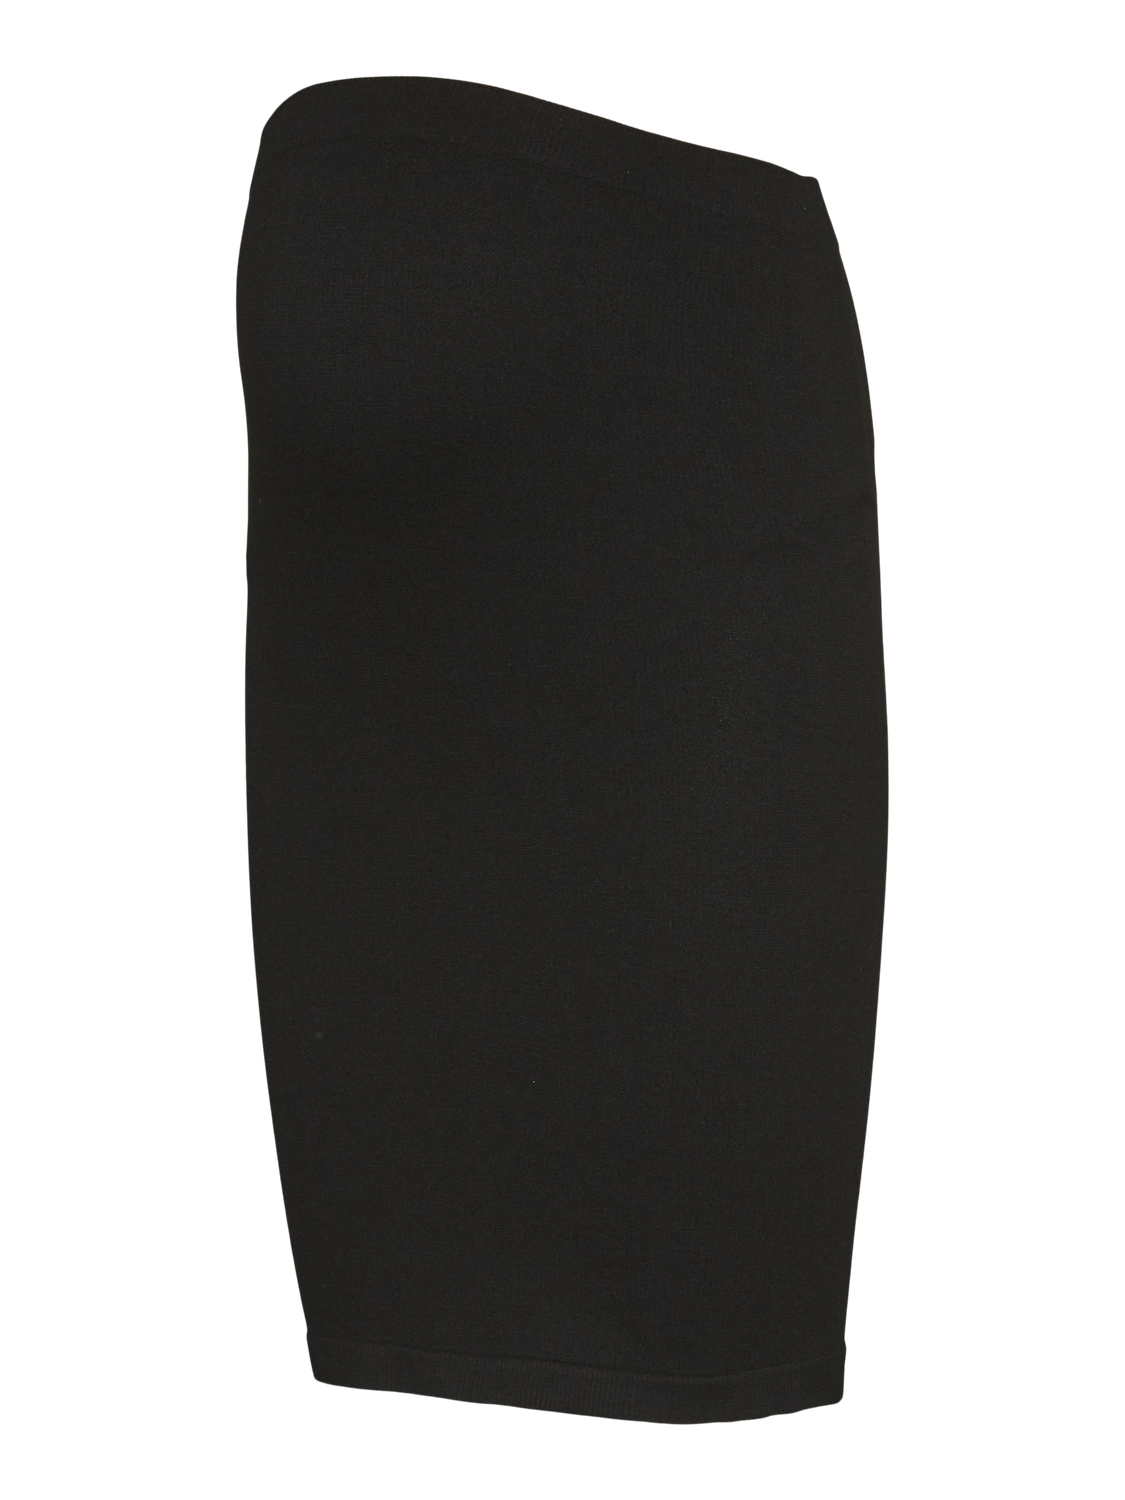 MAMA.LICIOUS Maternity-skirt -Black - 20021032